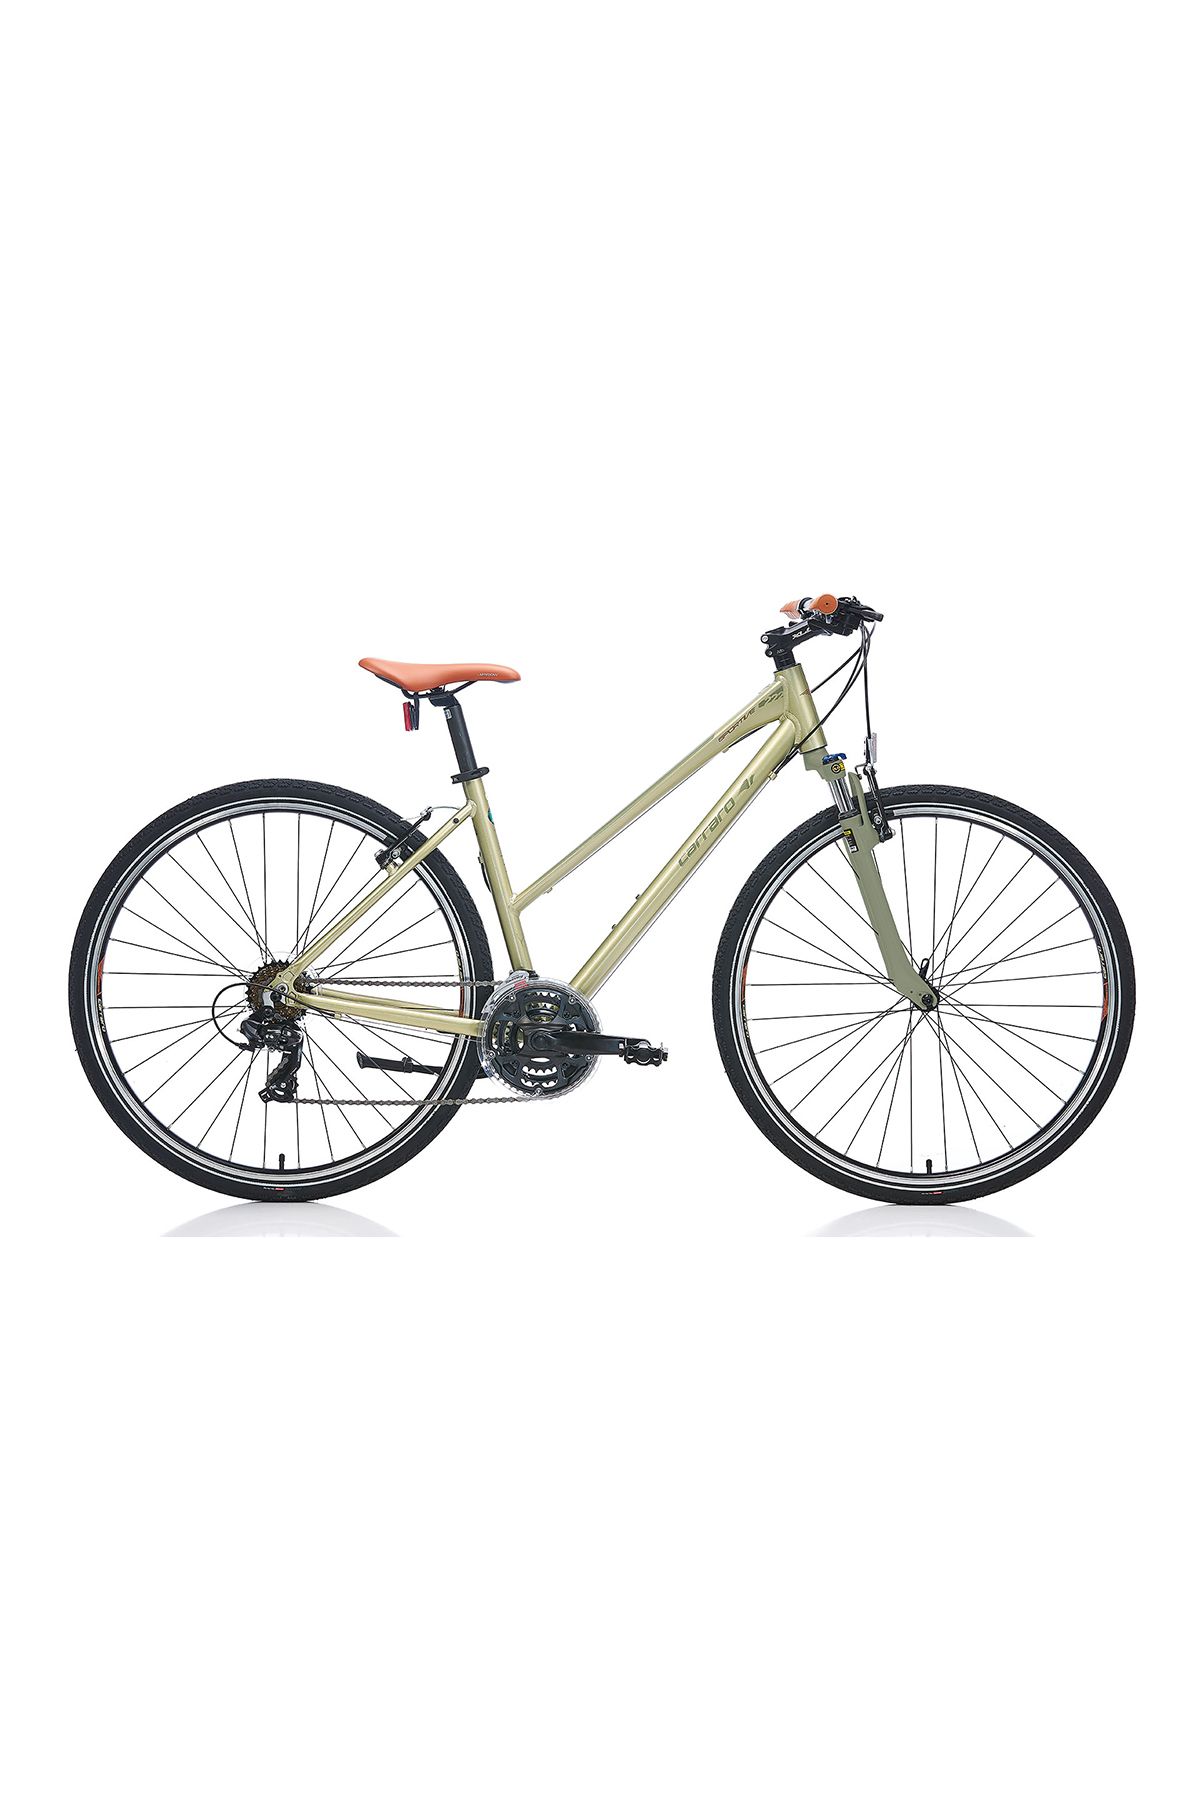 Carraro Sportive 222 28 jant Şehir & Tur Bisikleti (Lime Yeşil Koyu Yeşil Kahverengi) 46 Kadro